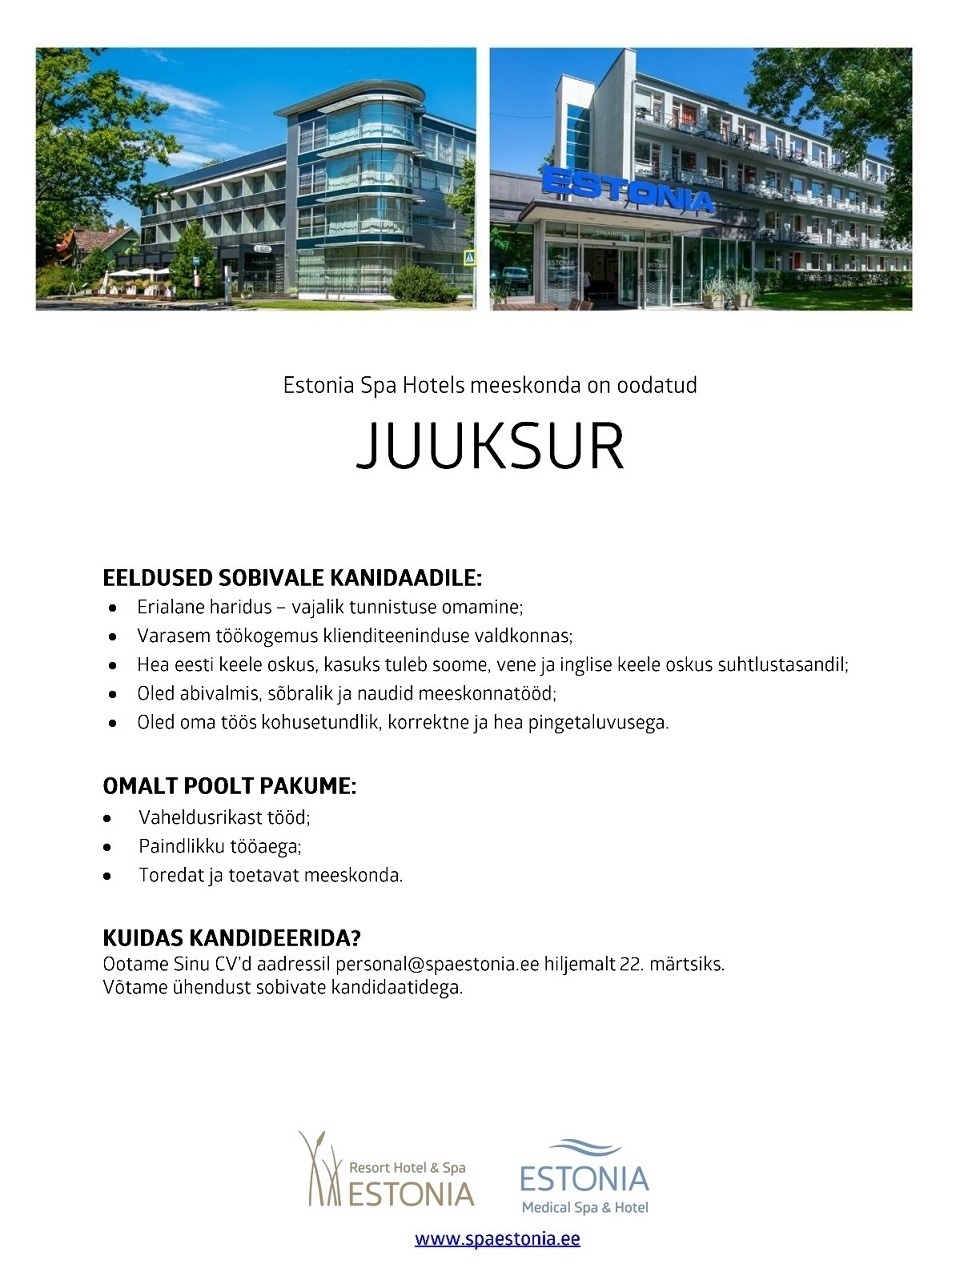 Estonia Spa Hotels AS Juuksur